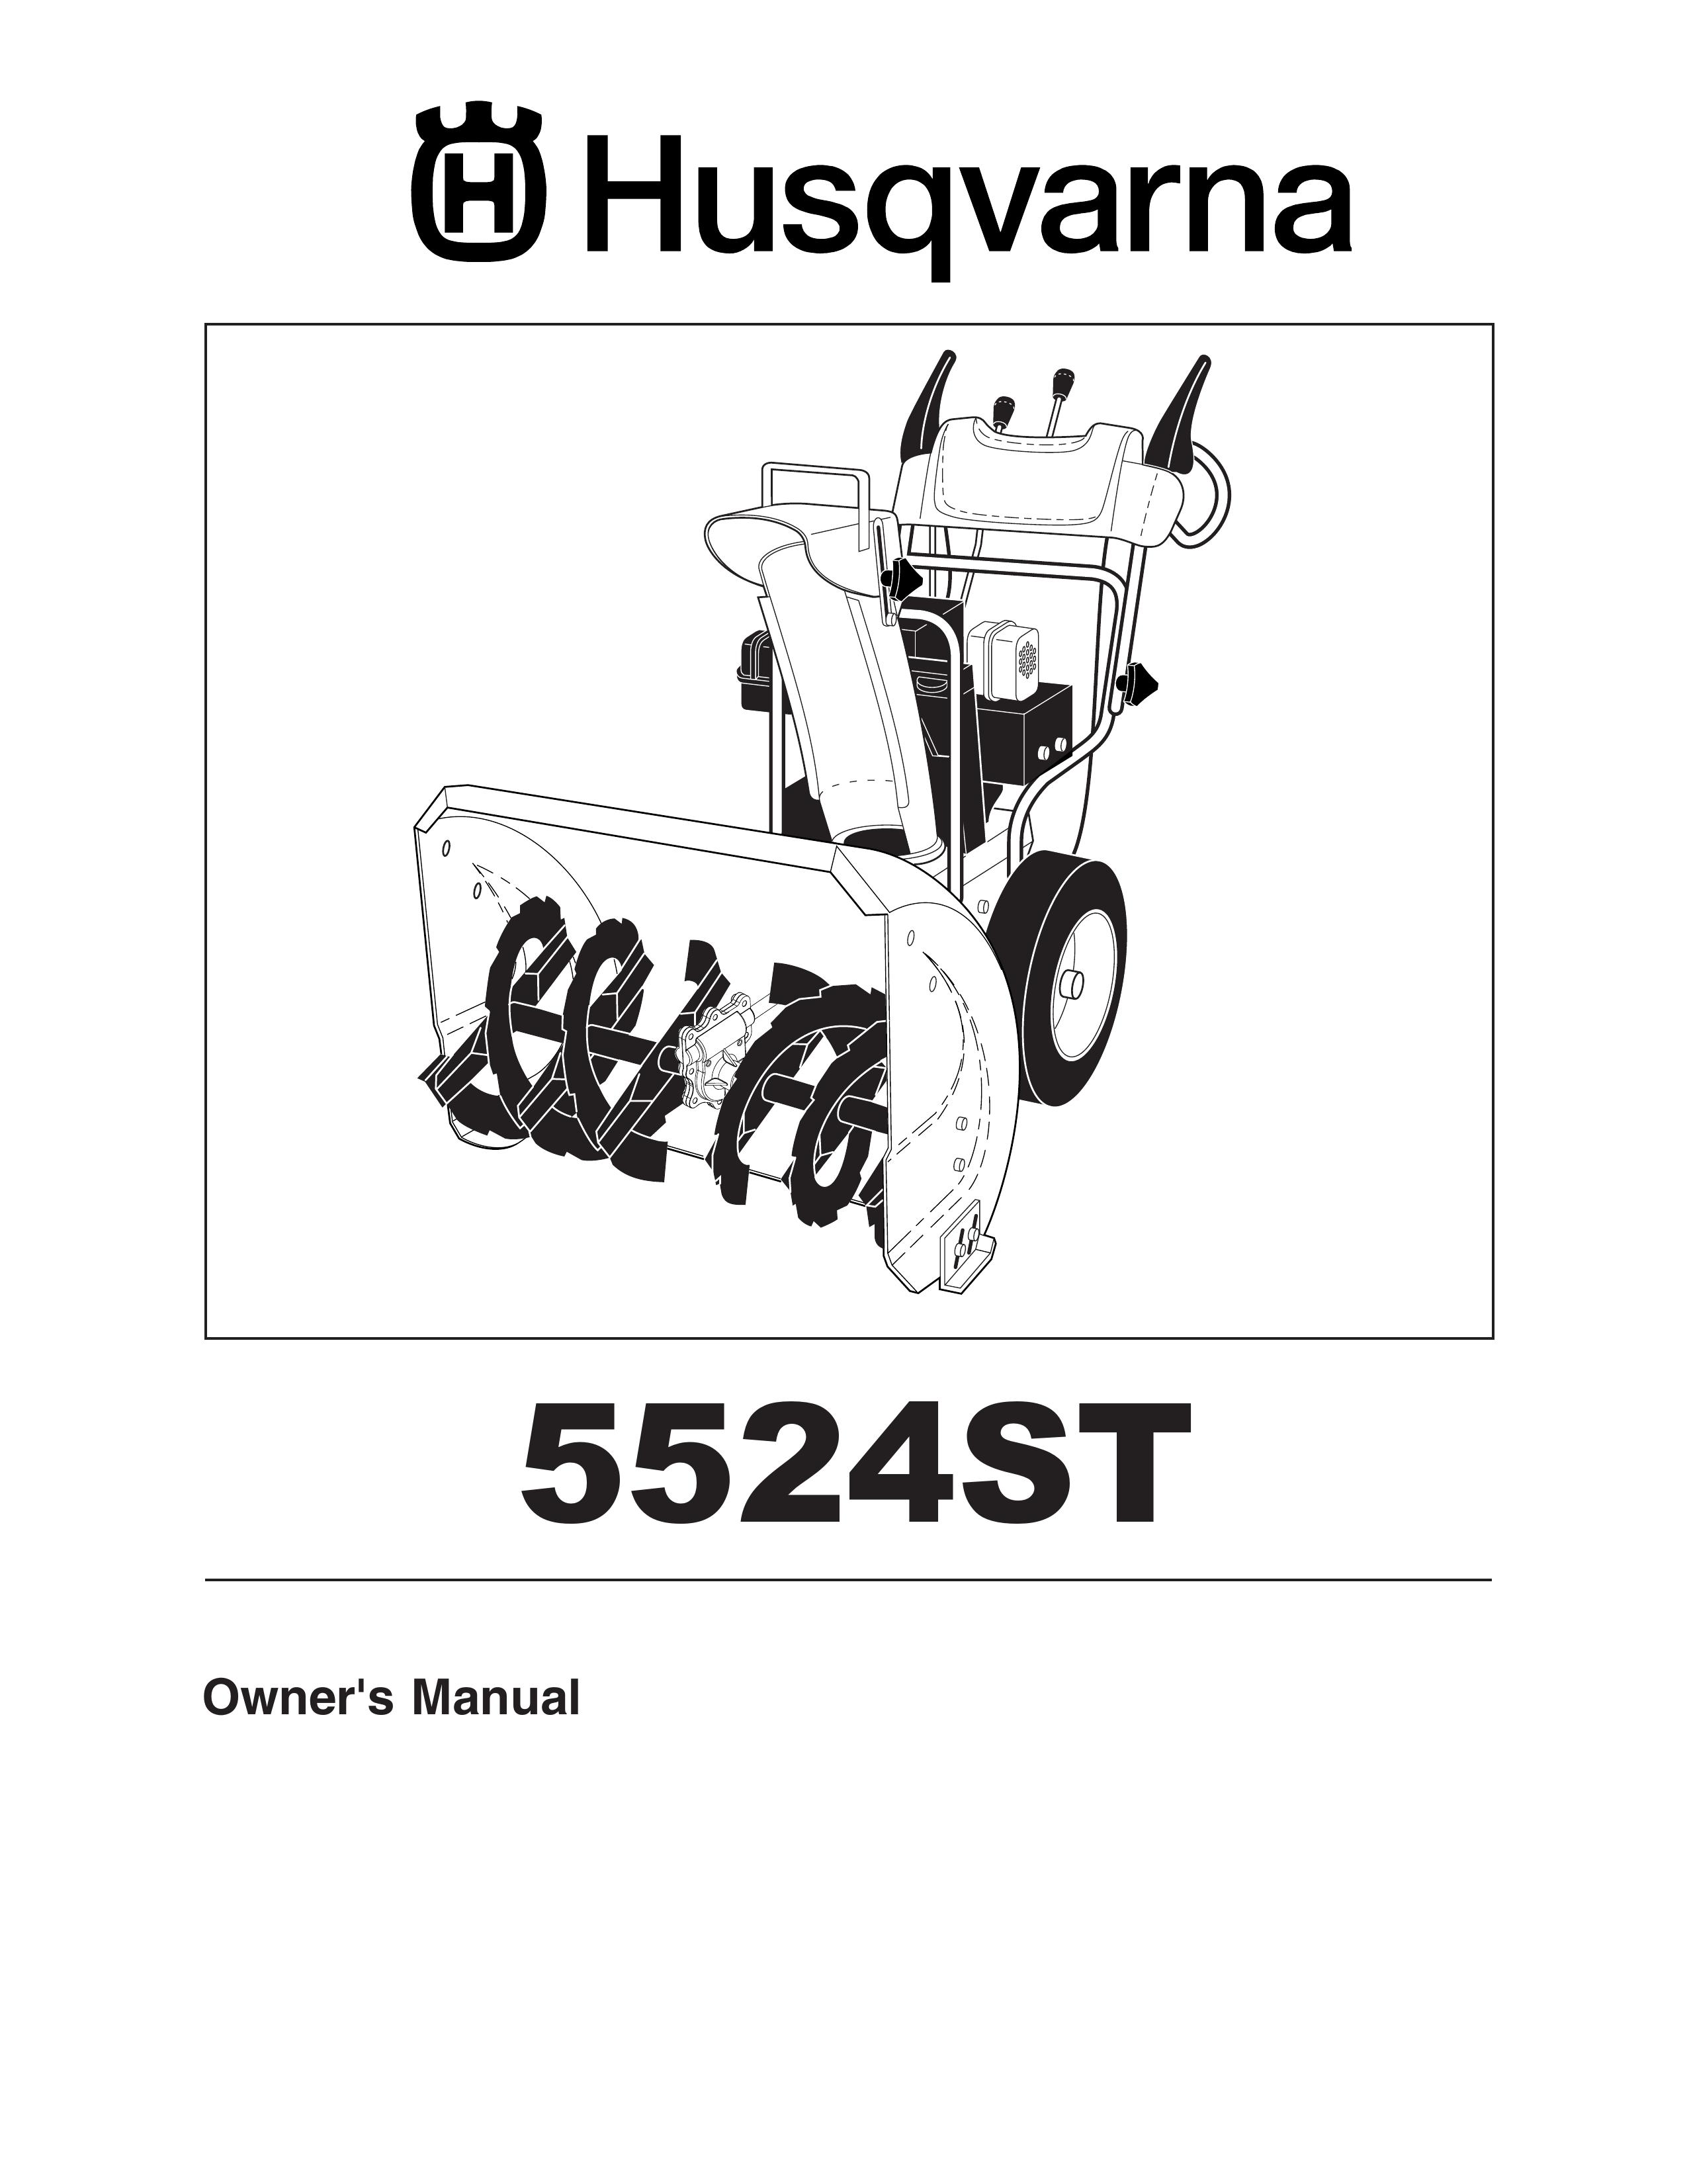 Husqvarna 5524ST Snow Blower User Manual